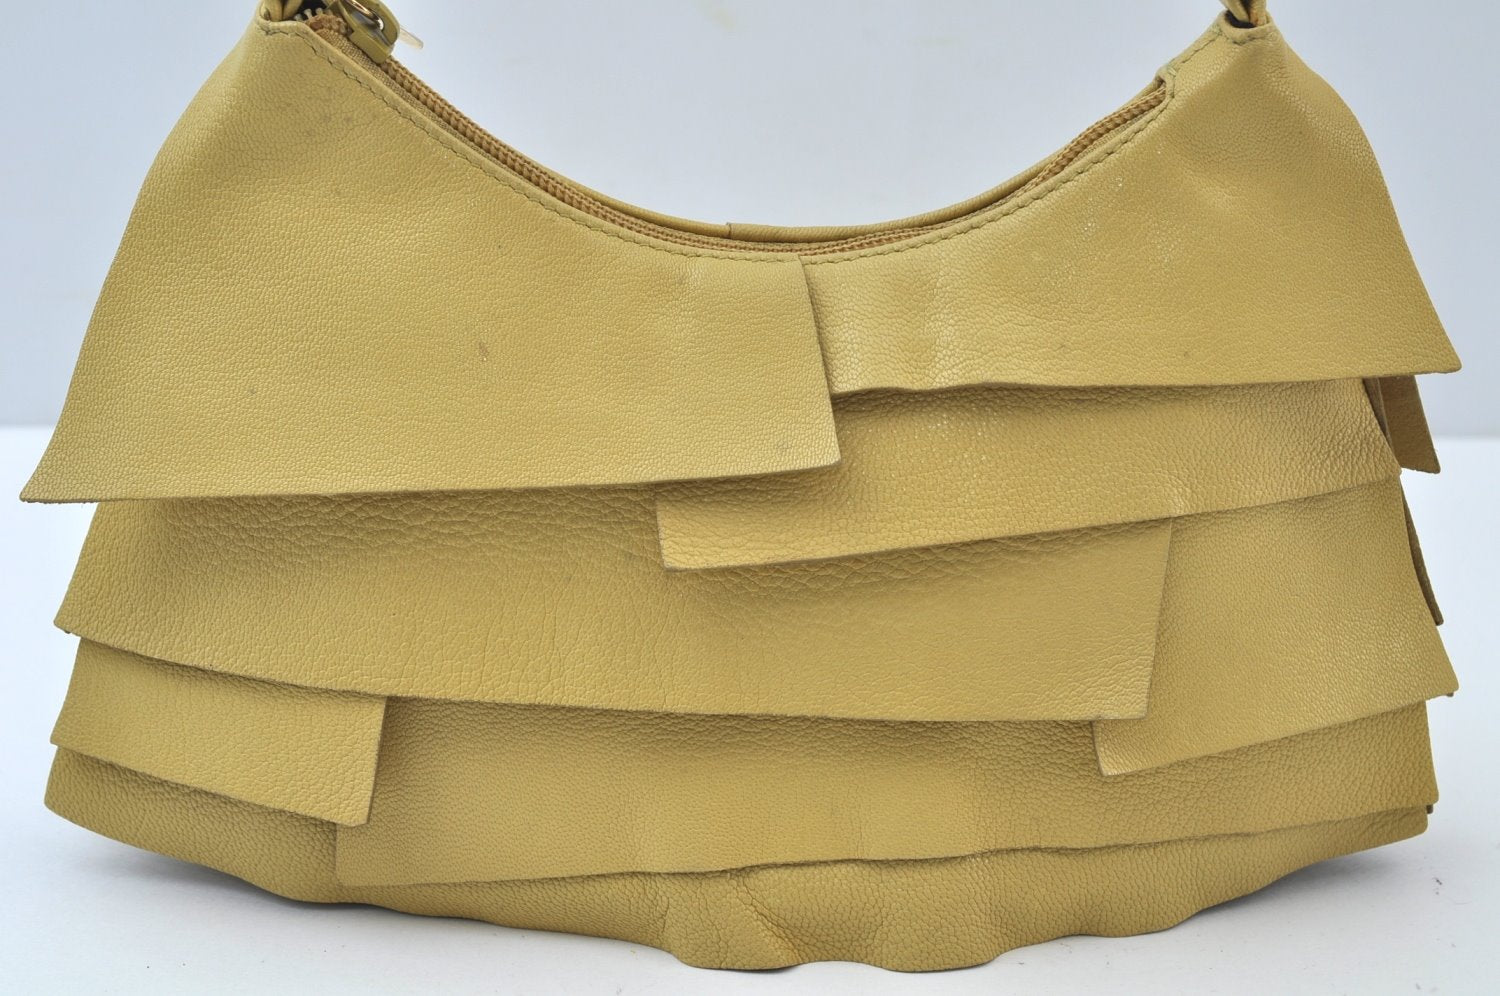 Authentic YVES SAINT LAURENT Shoulder Hand Bag Purse Leather Yellow K9872